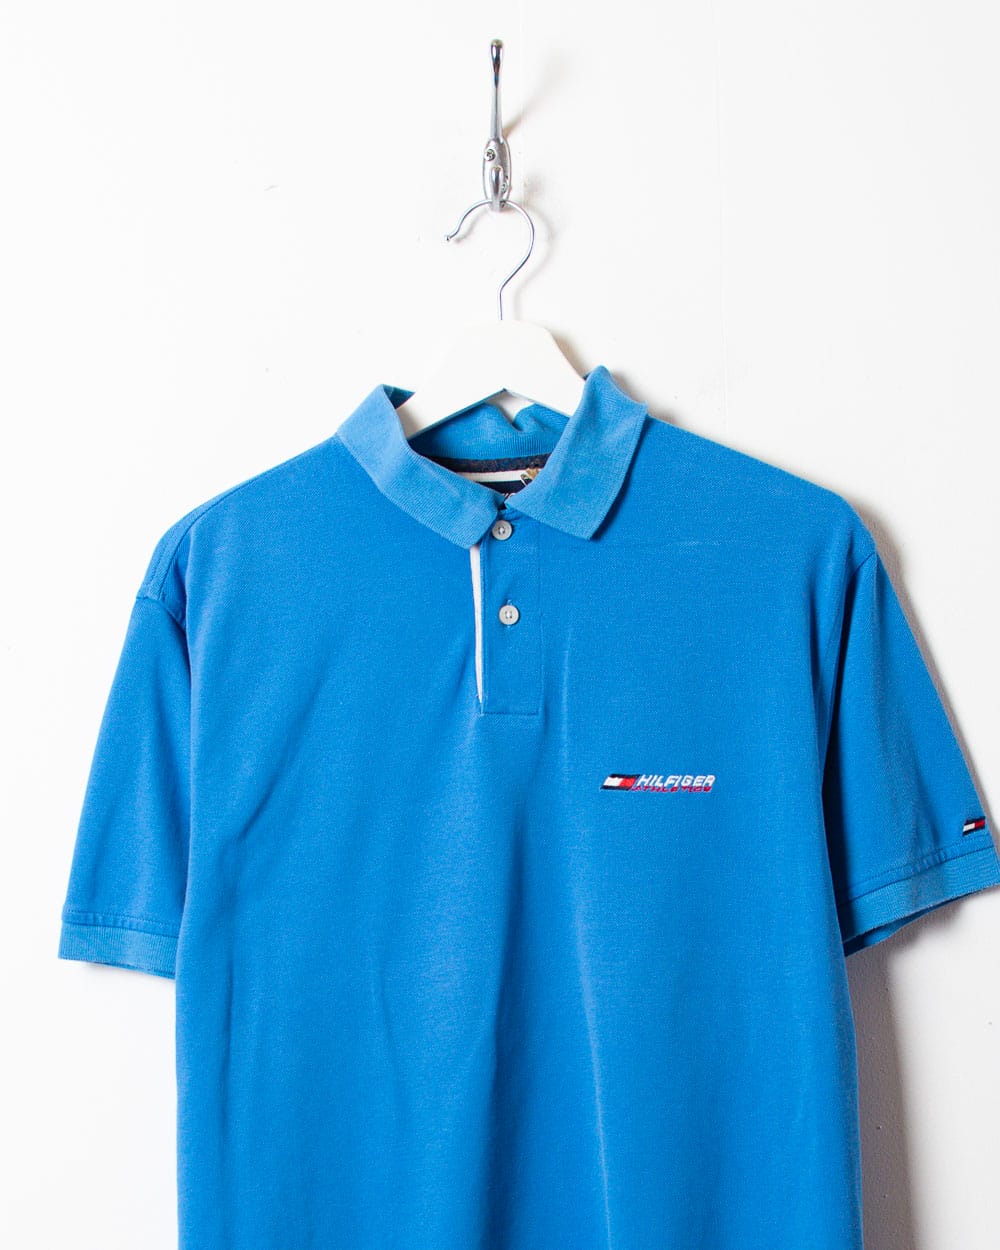 BabyBlue Tommy Hilfiger Athletics Polo Shirt - Small